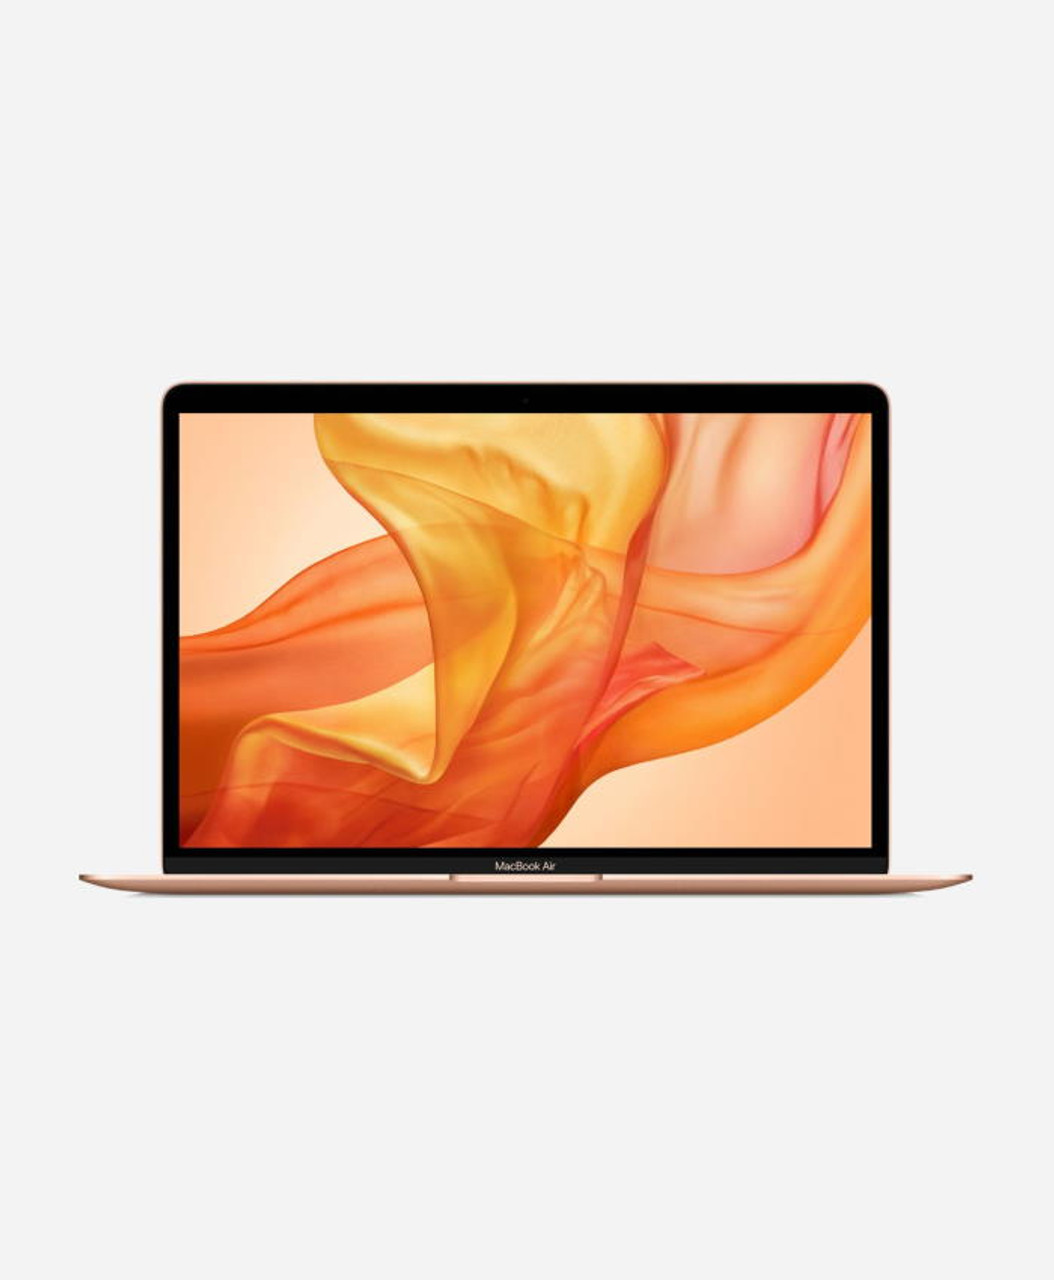 MacBook Air 13.3-inch (Retina, Gold) 1.6GHz Dual Core i5 (Late 2018). -  Apple MREE2LL/A